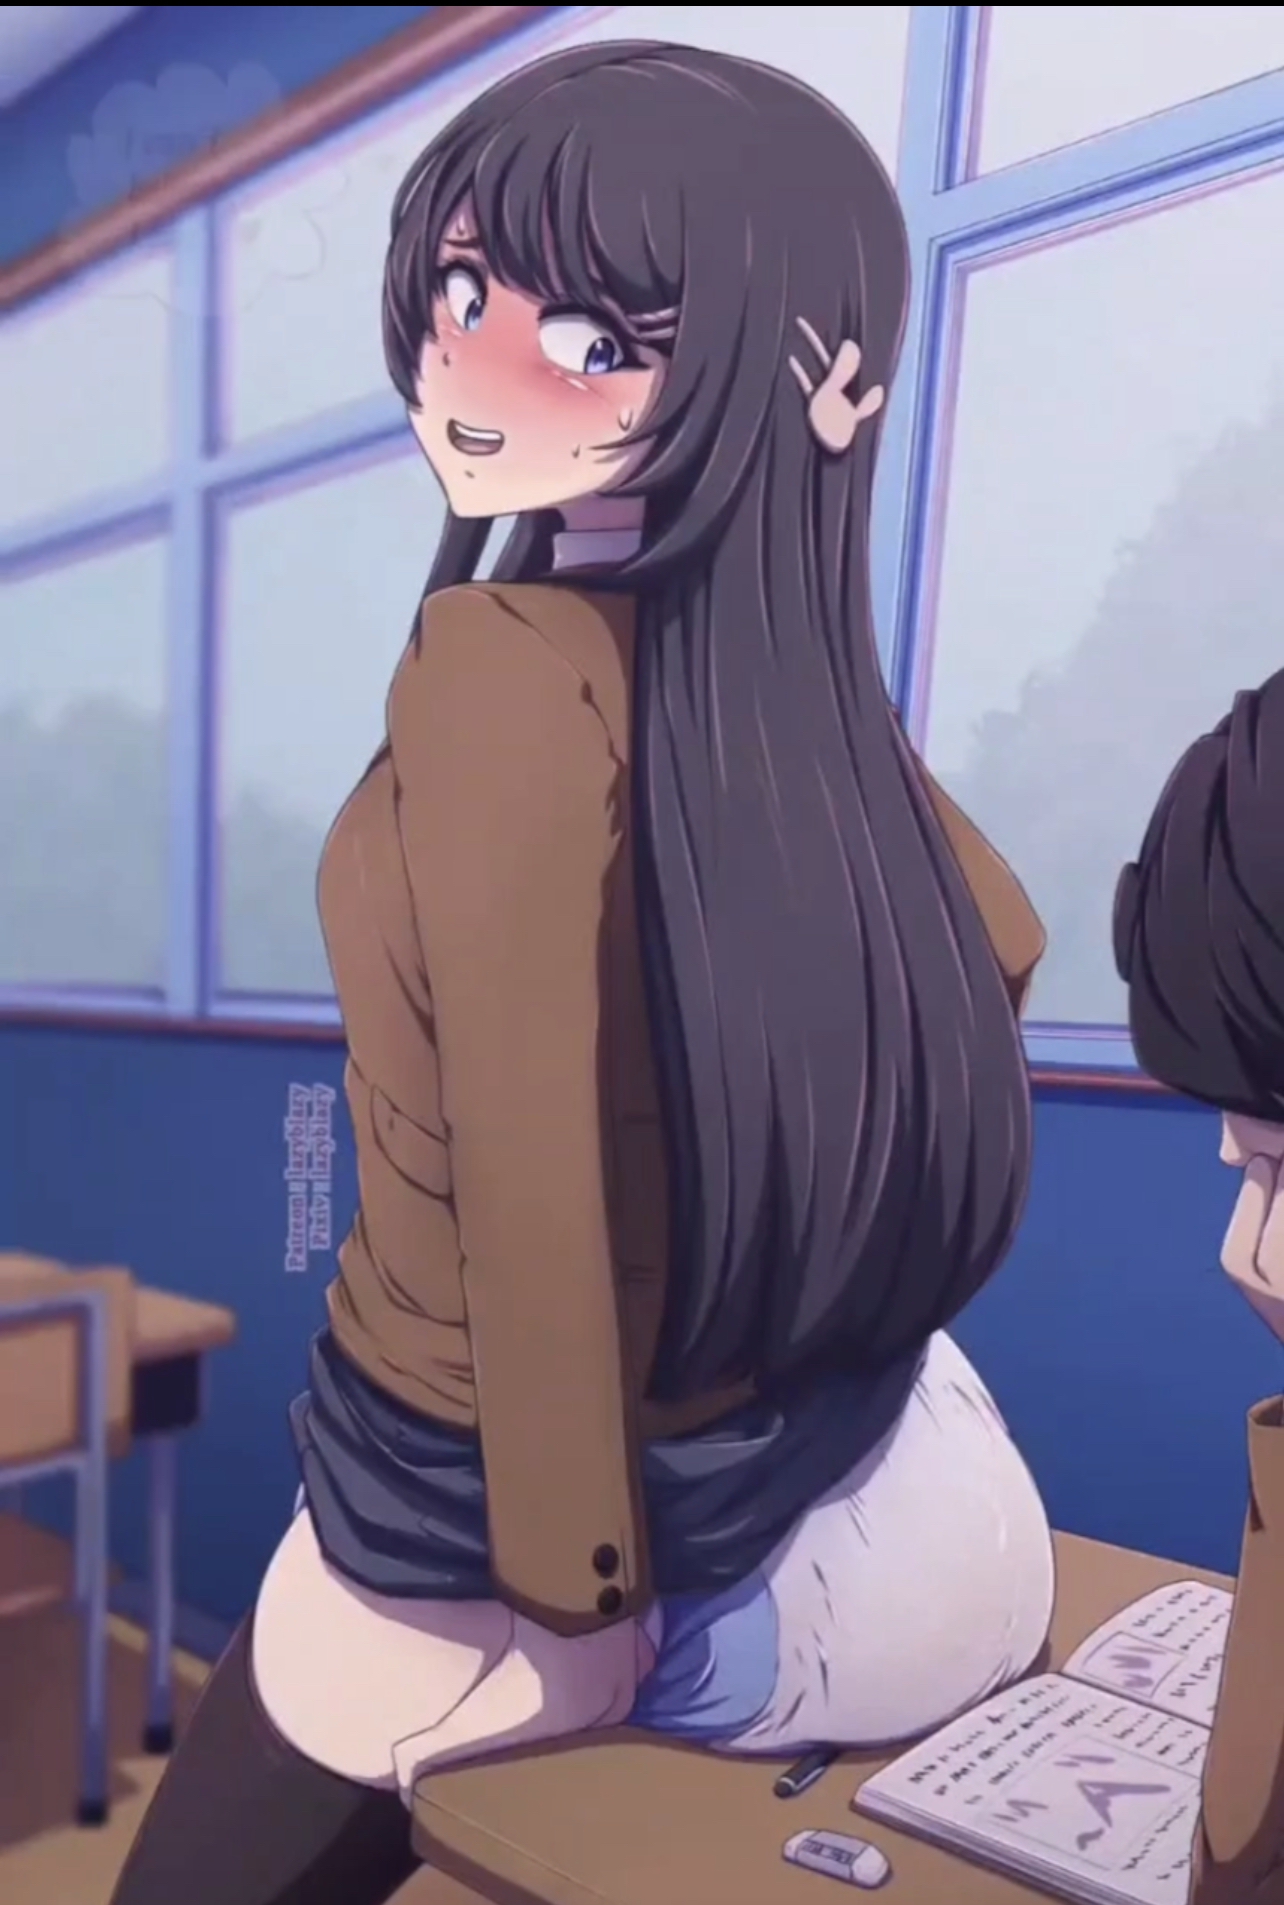 Girl Panty Poop Hentai - Mai Sakurajima poops her diaper in class (No Audio) - ThisVid.com